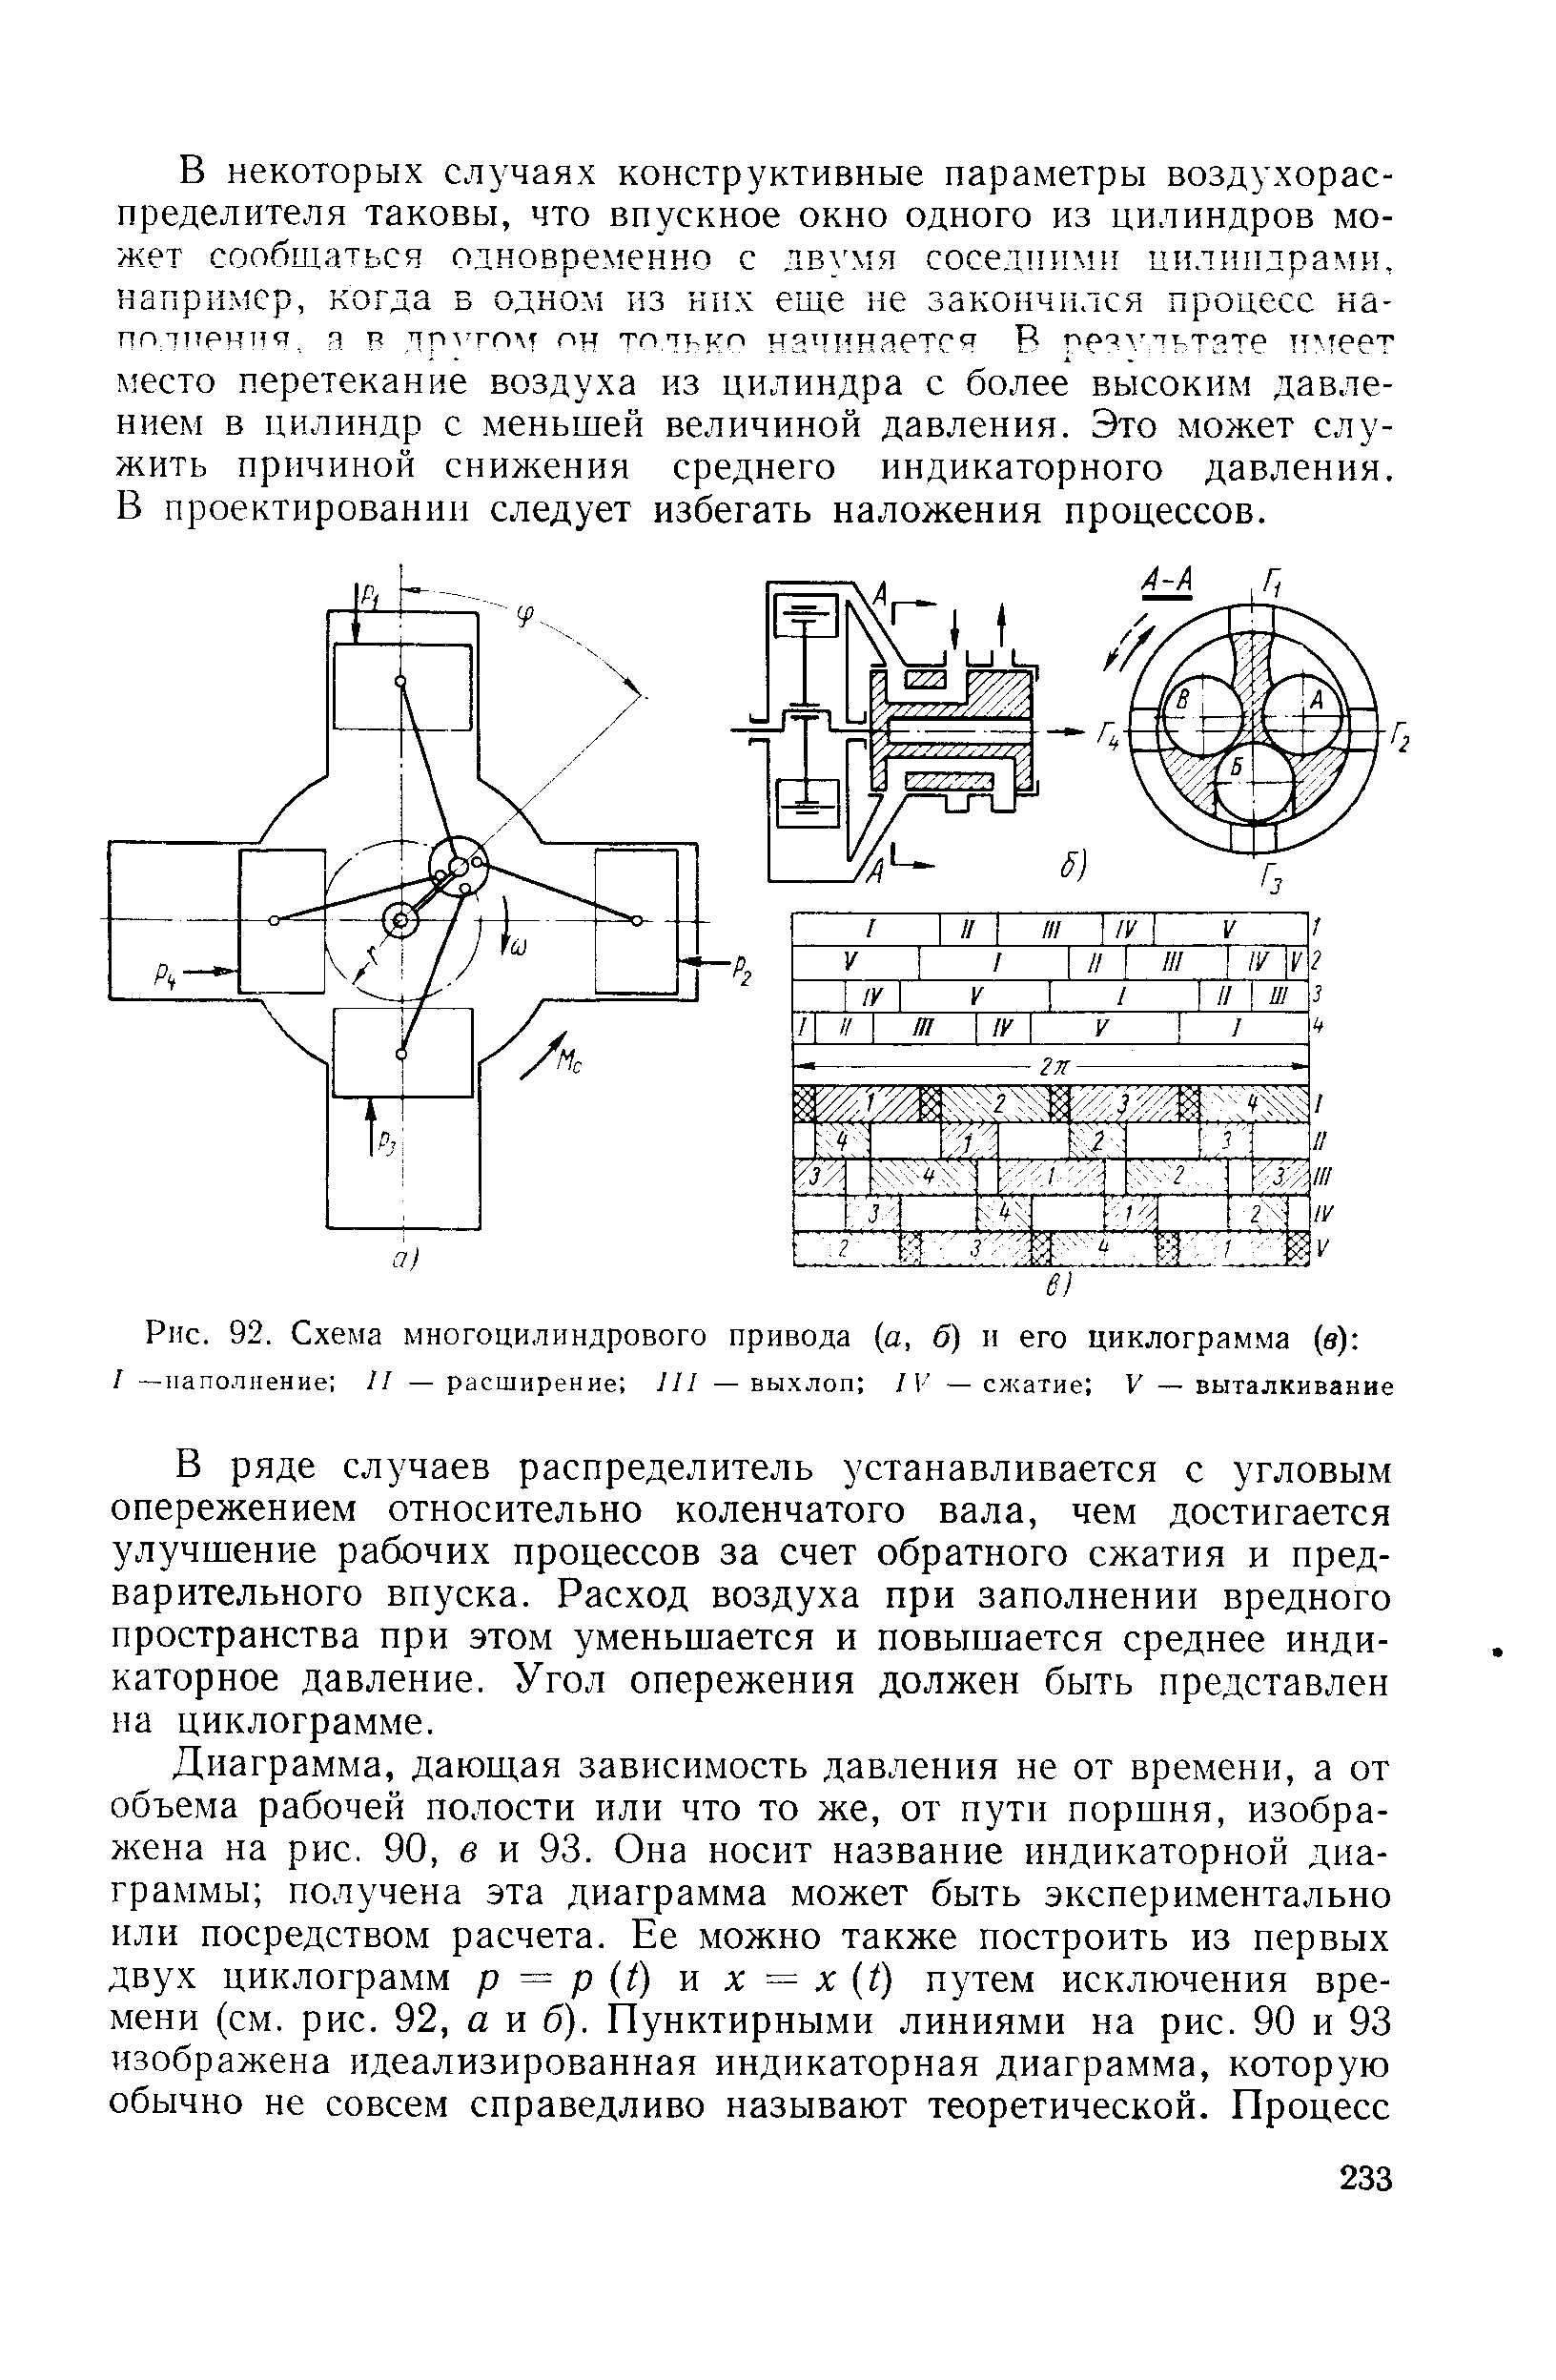 Рис. 92. Схема многоцилиндрового привода (а, б) и его циклограмма (в) 
